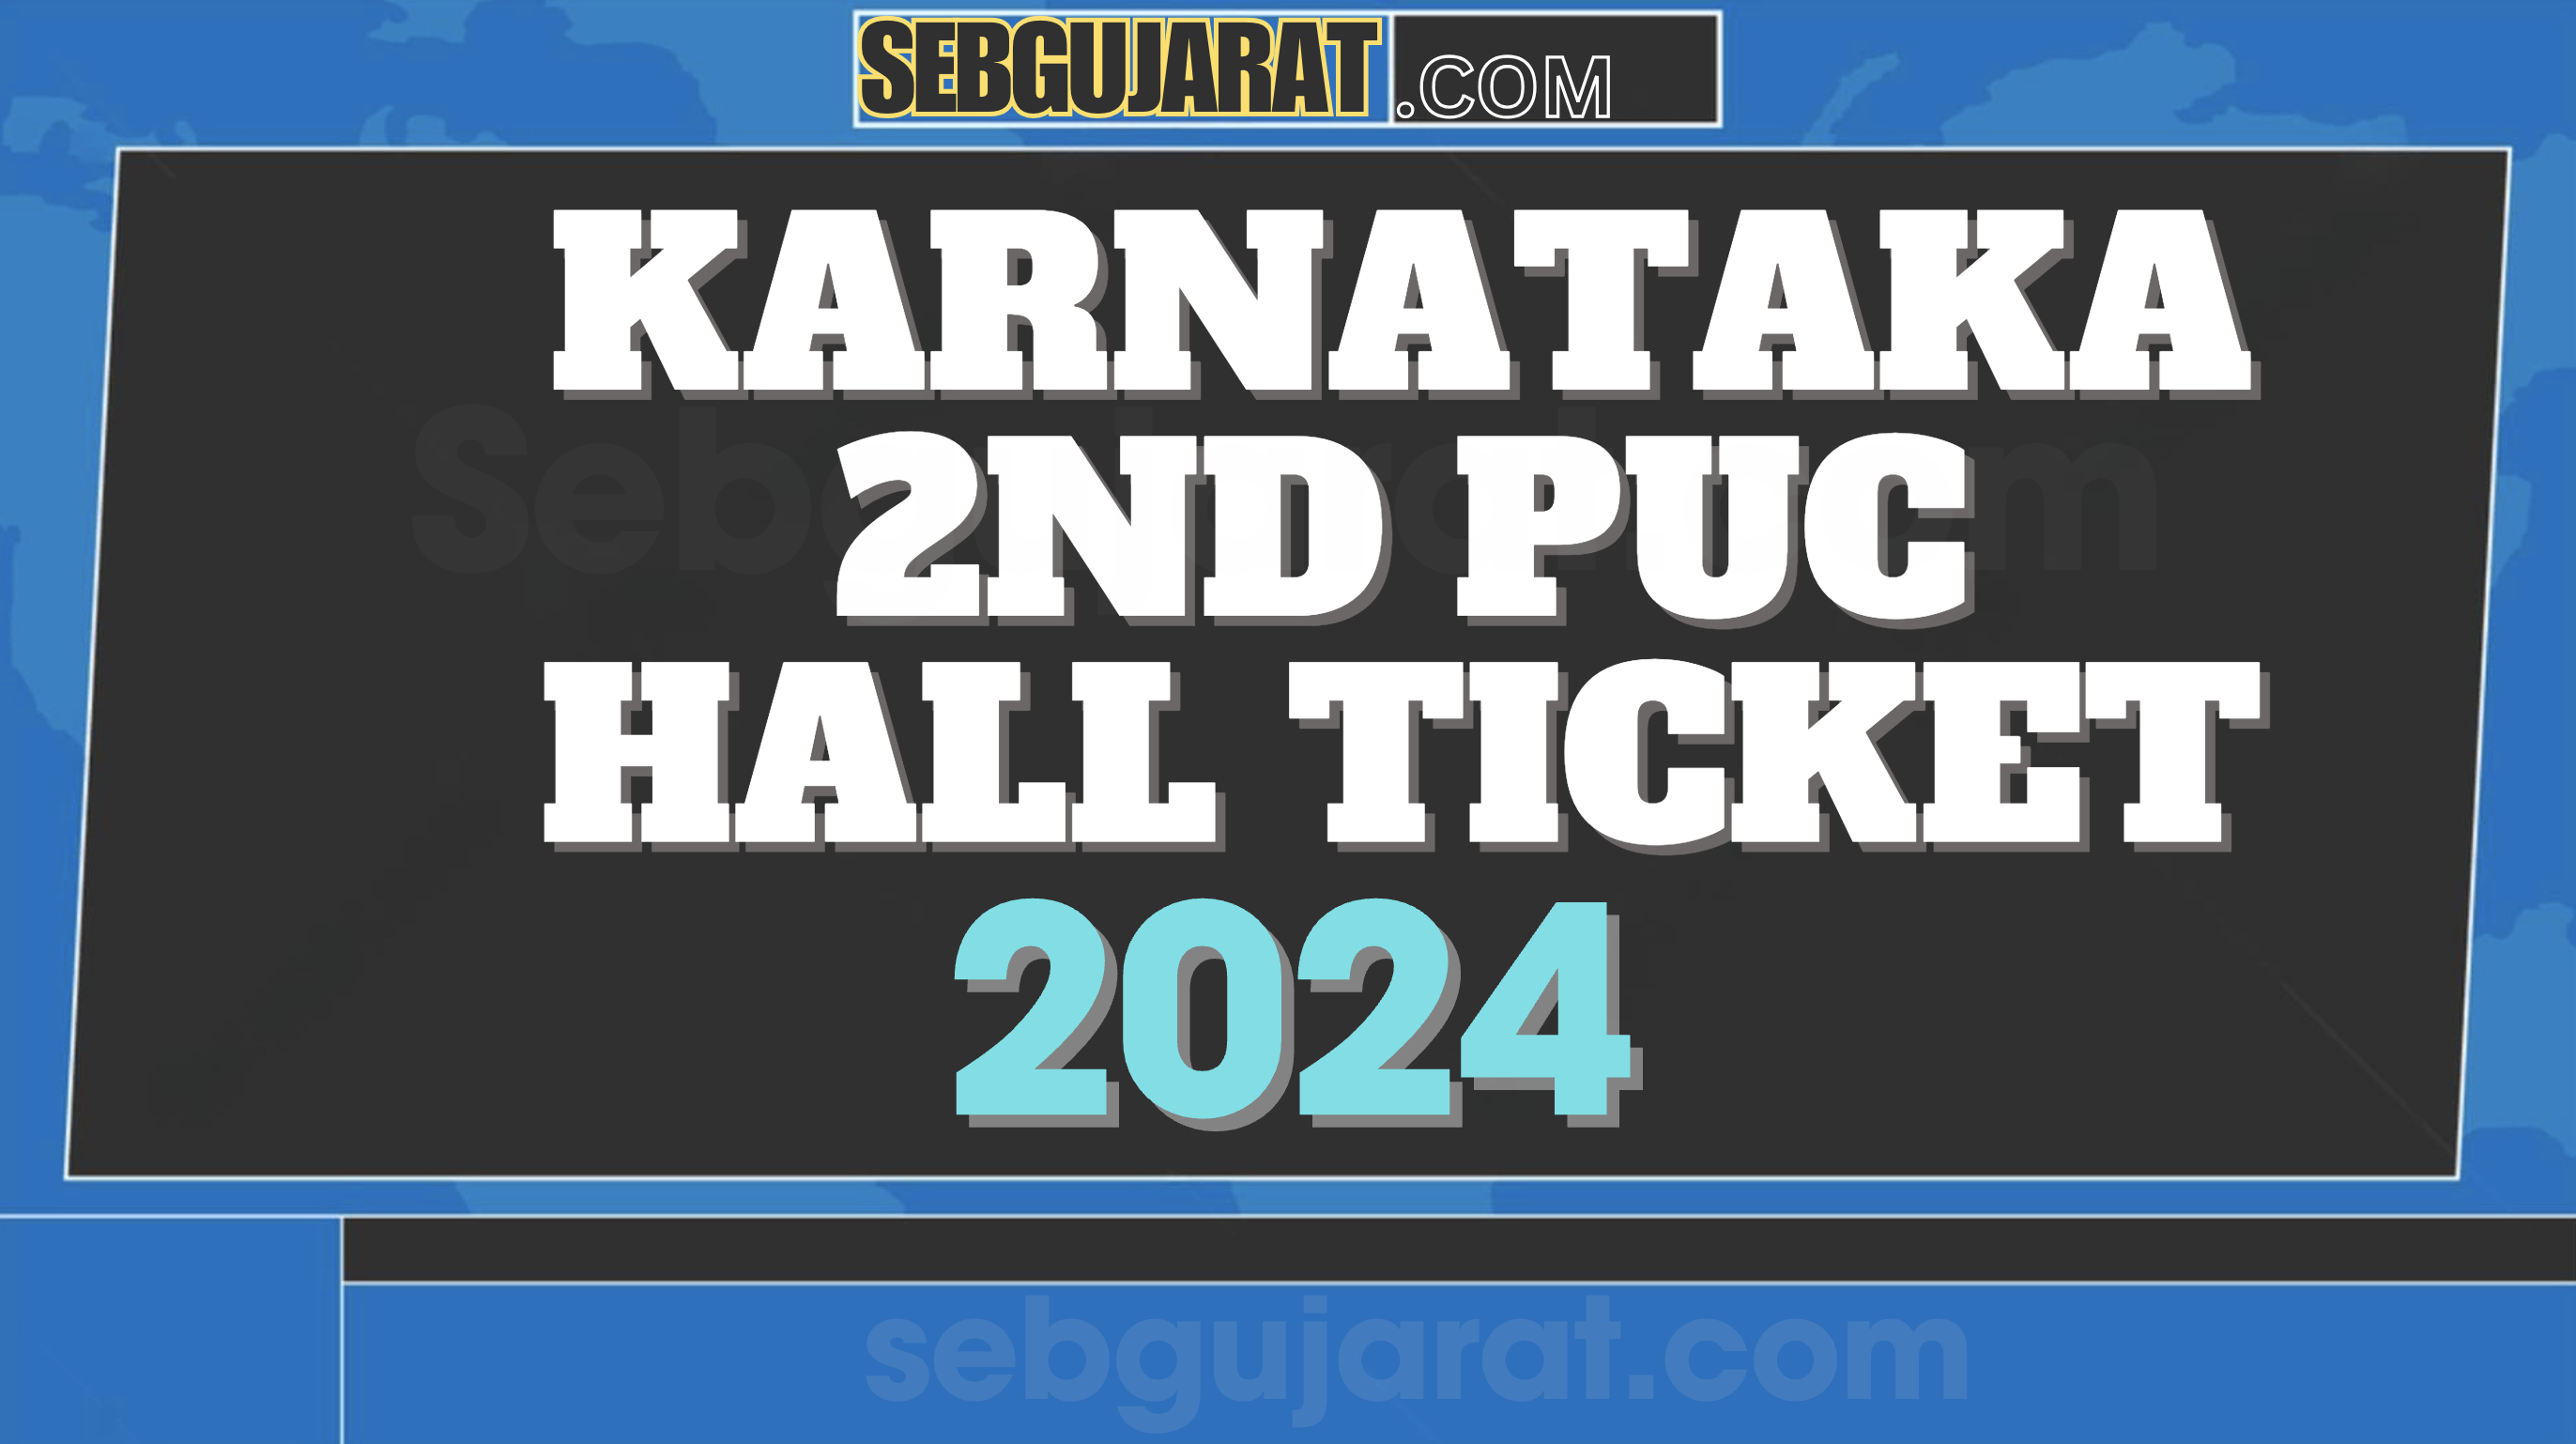 Karnataka 2nd puc hall ticket 2024, second puc hall ticket, 2nd puc hall ticket photo